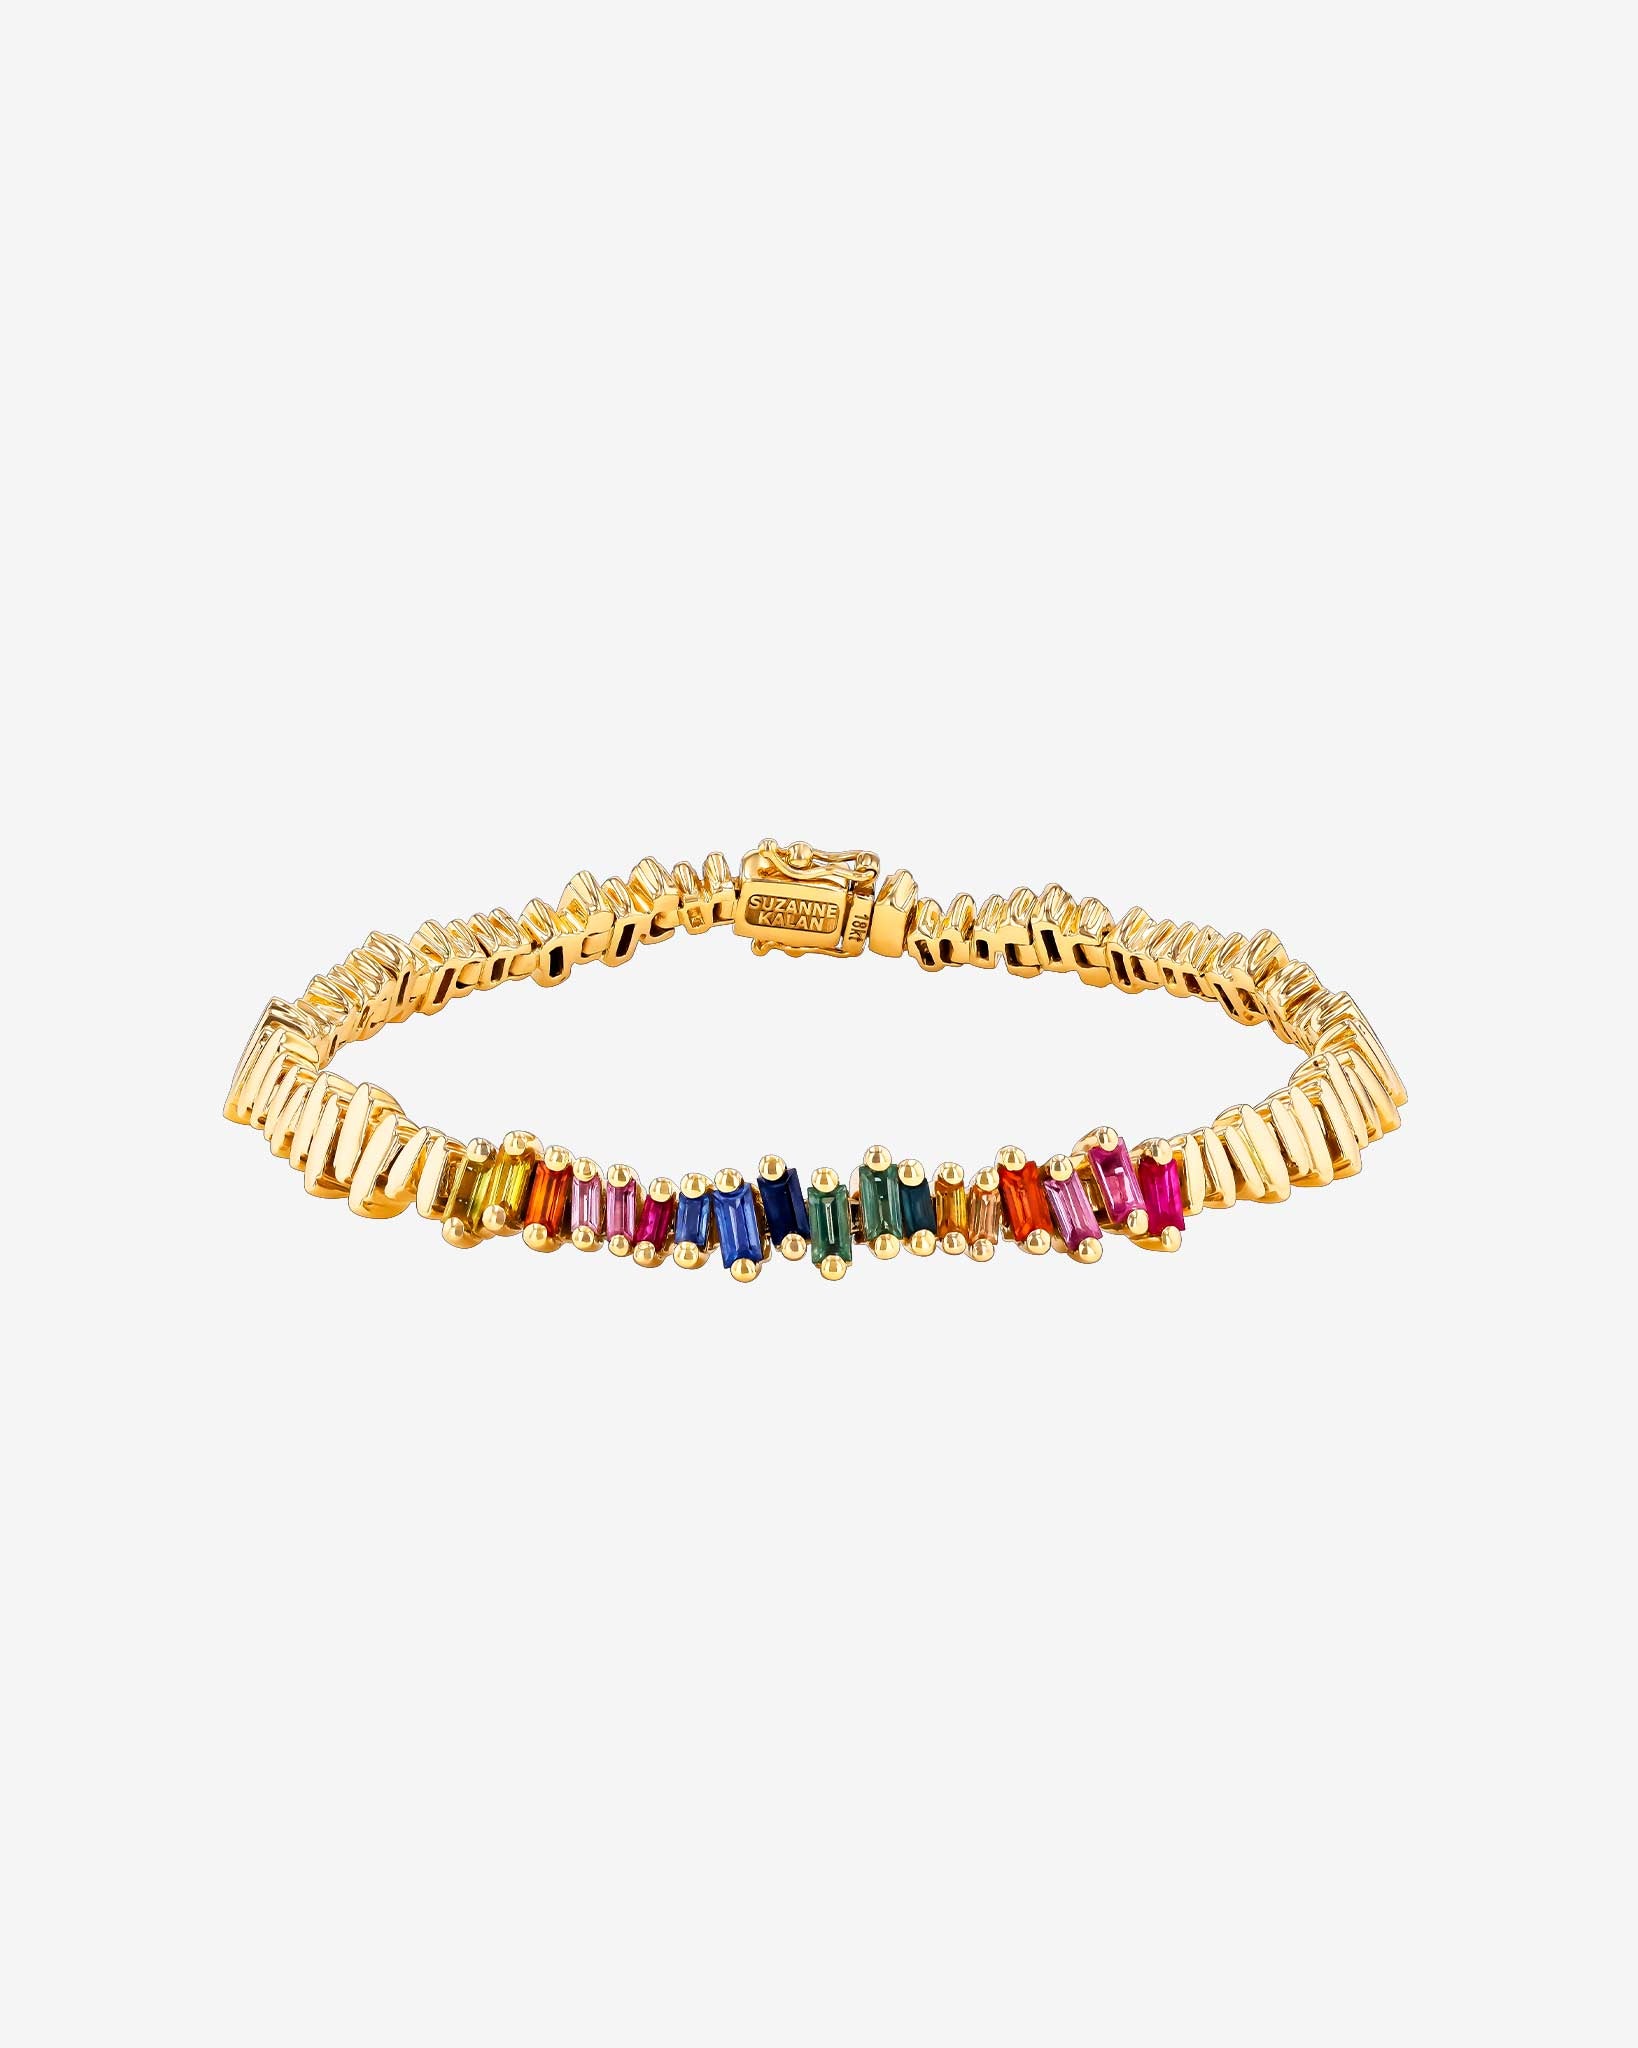 Suzanne Kalan Golden Rainbow Sapphire ID Bracelet in 18k yellow gold